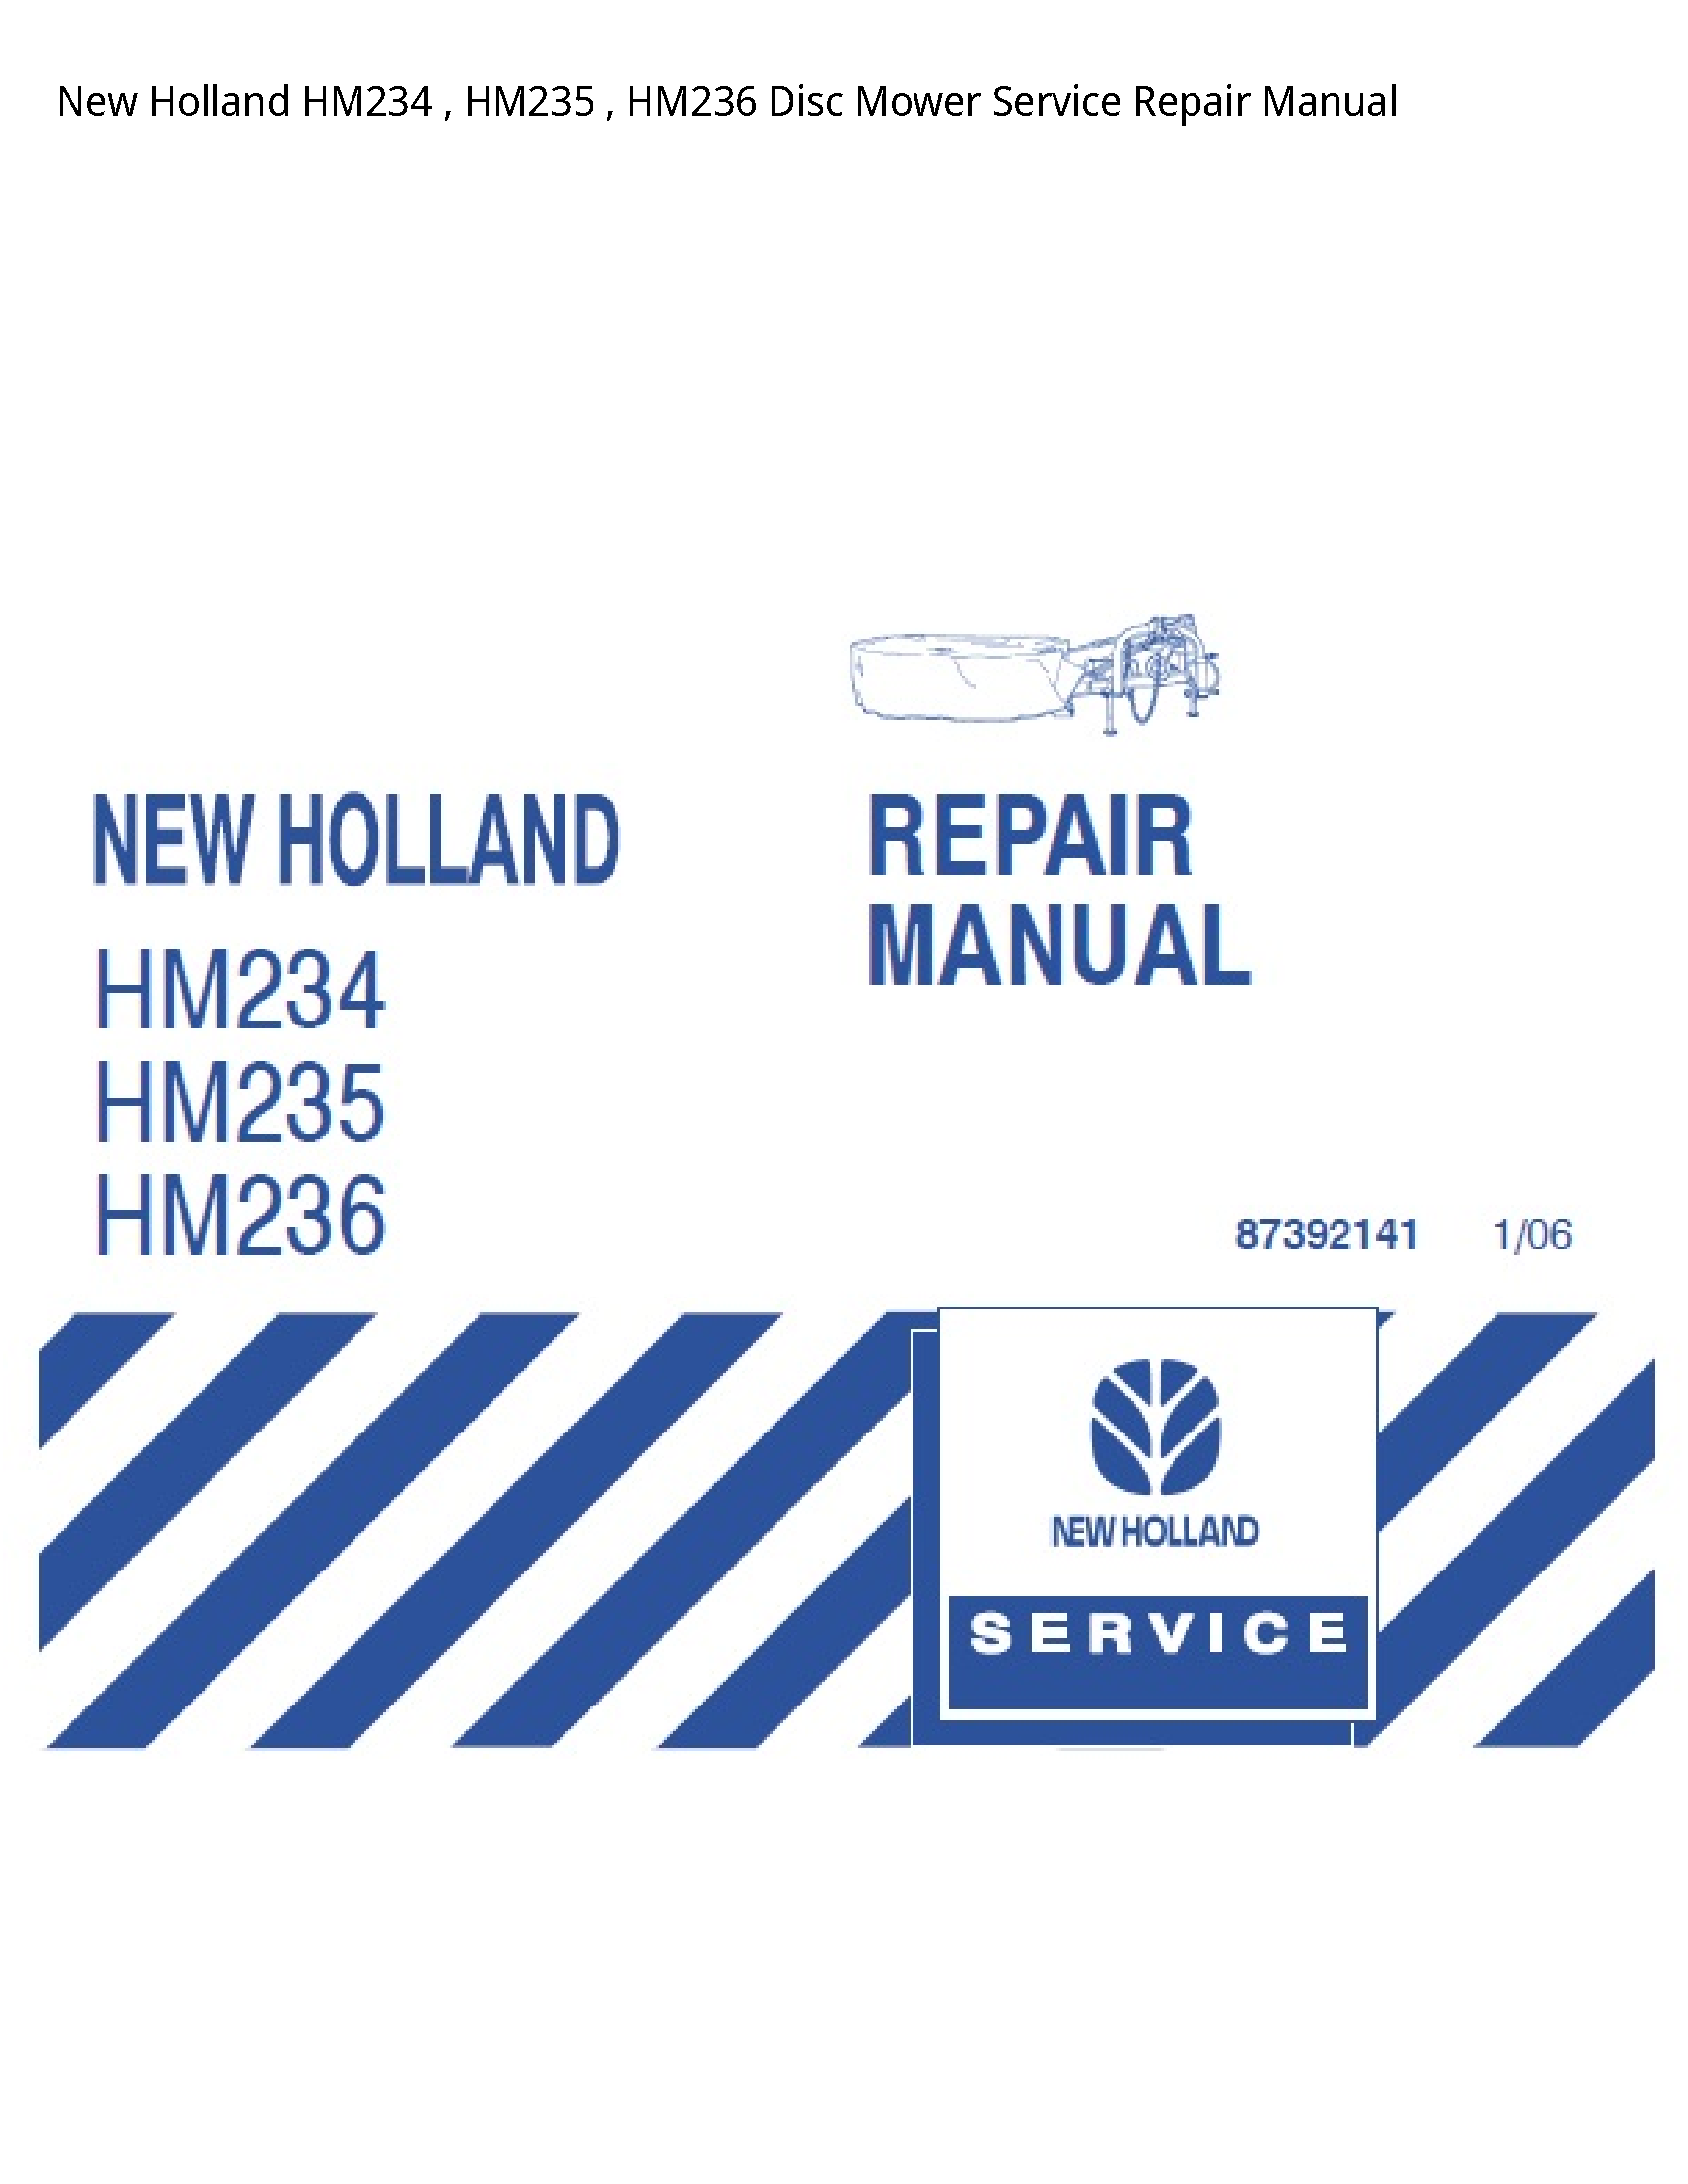 New Holland HM234 Disc Mower manual